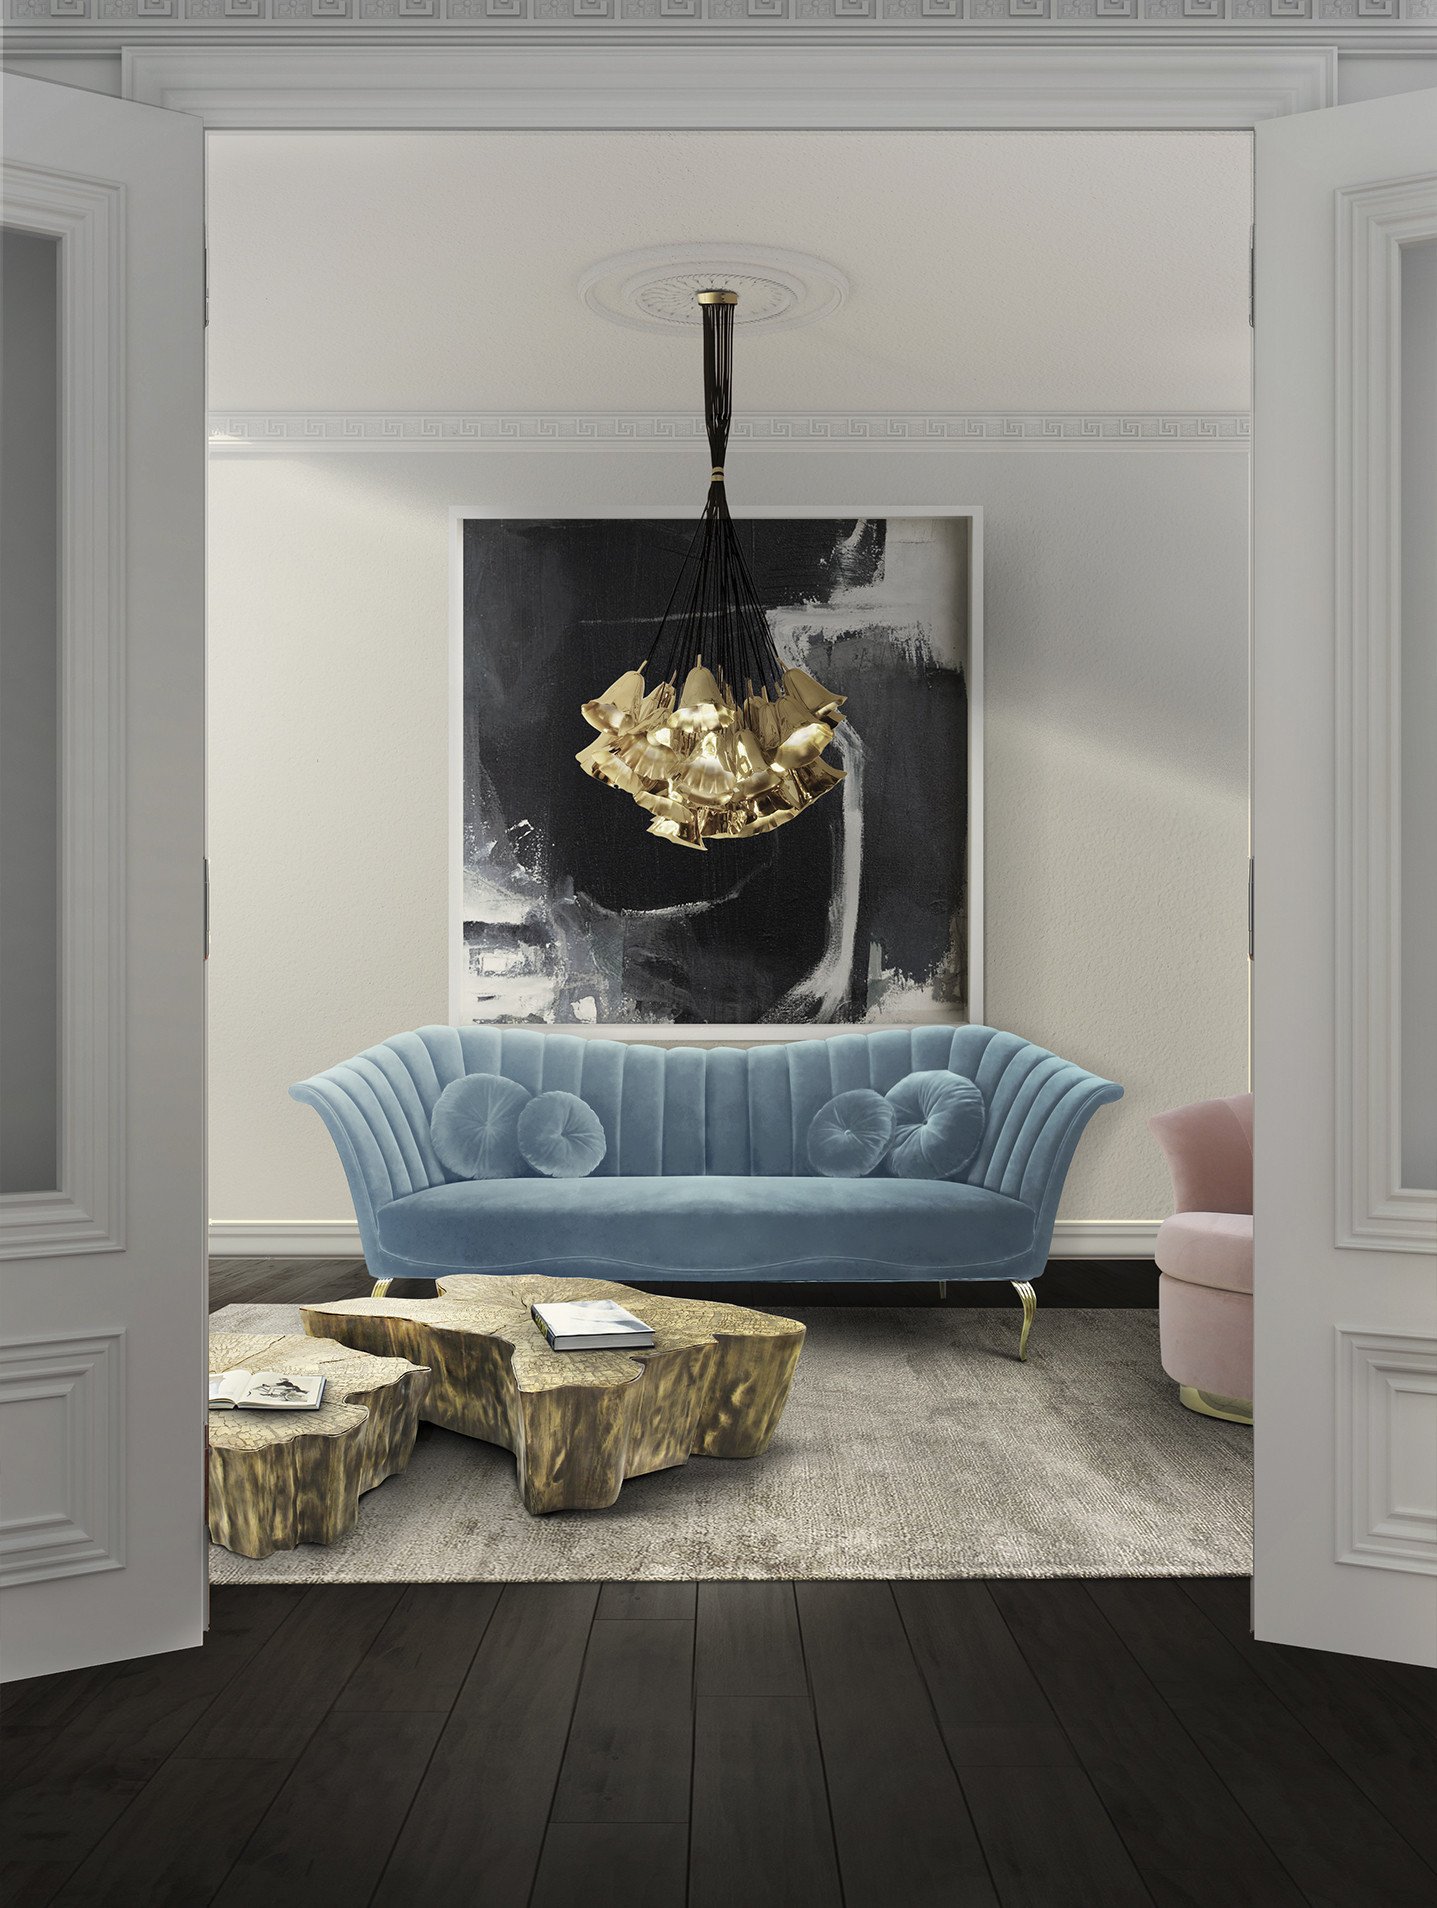 Bedroom Chairs for Sale Inspirational 16 Spectacular Gray Hardwood Floors Bedroom